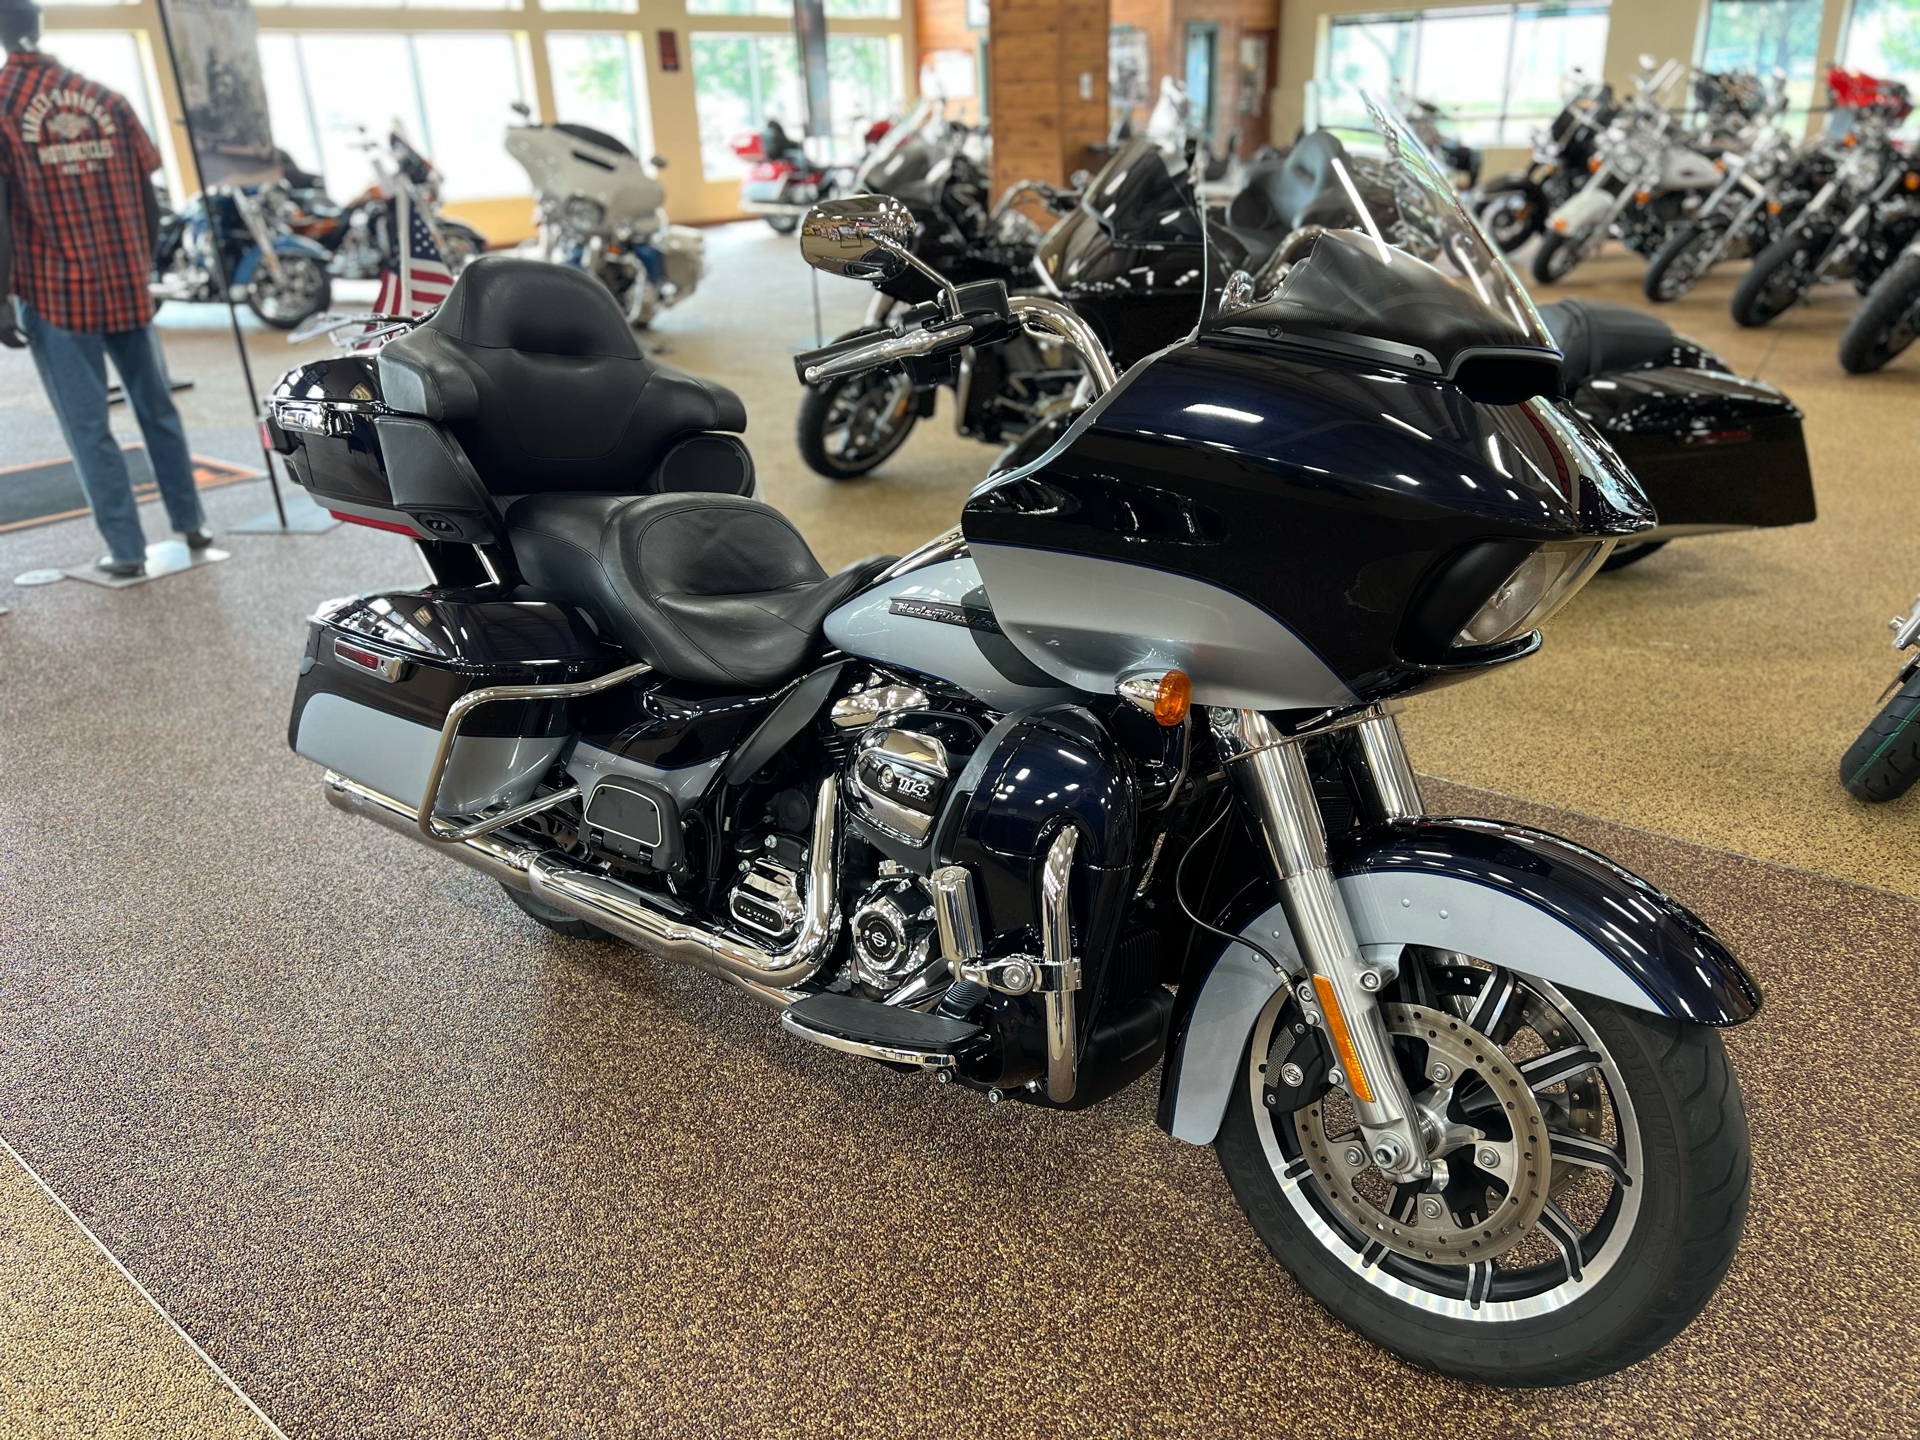 2019 Harley-Davidson Road Glide® Ultra in Sauk Rapids, Minnesota - Photo 5